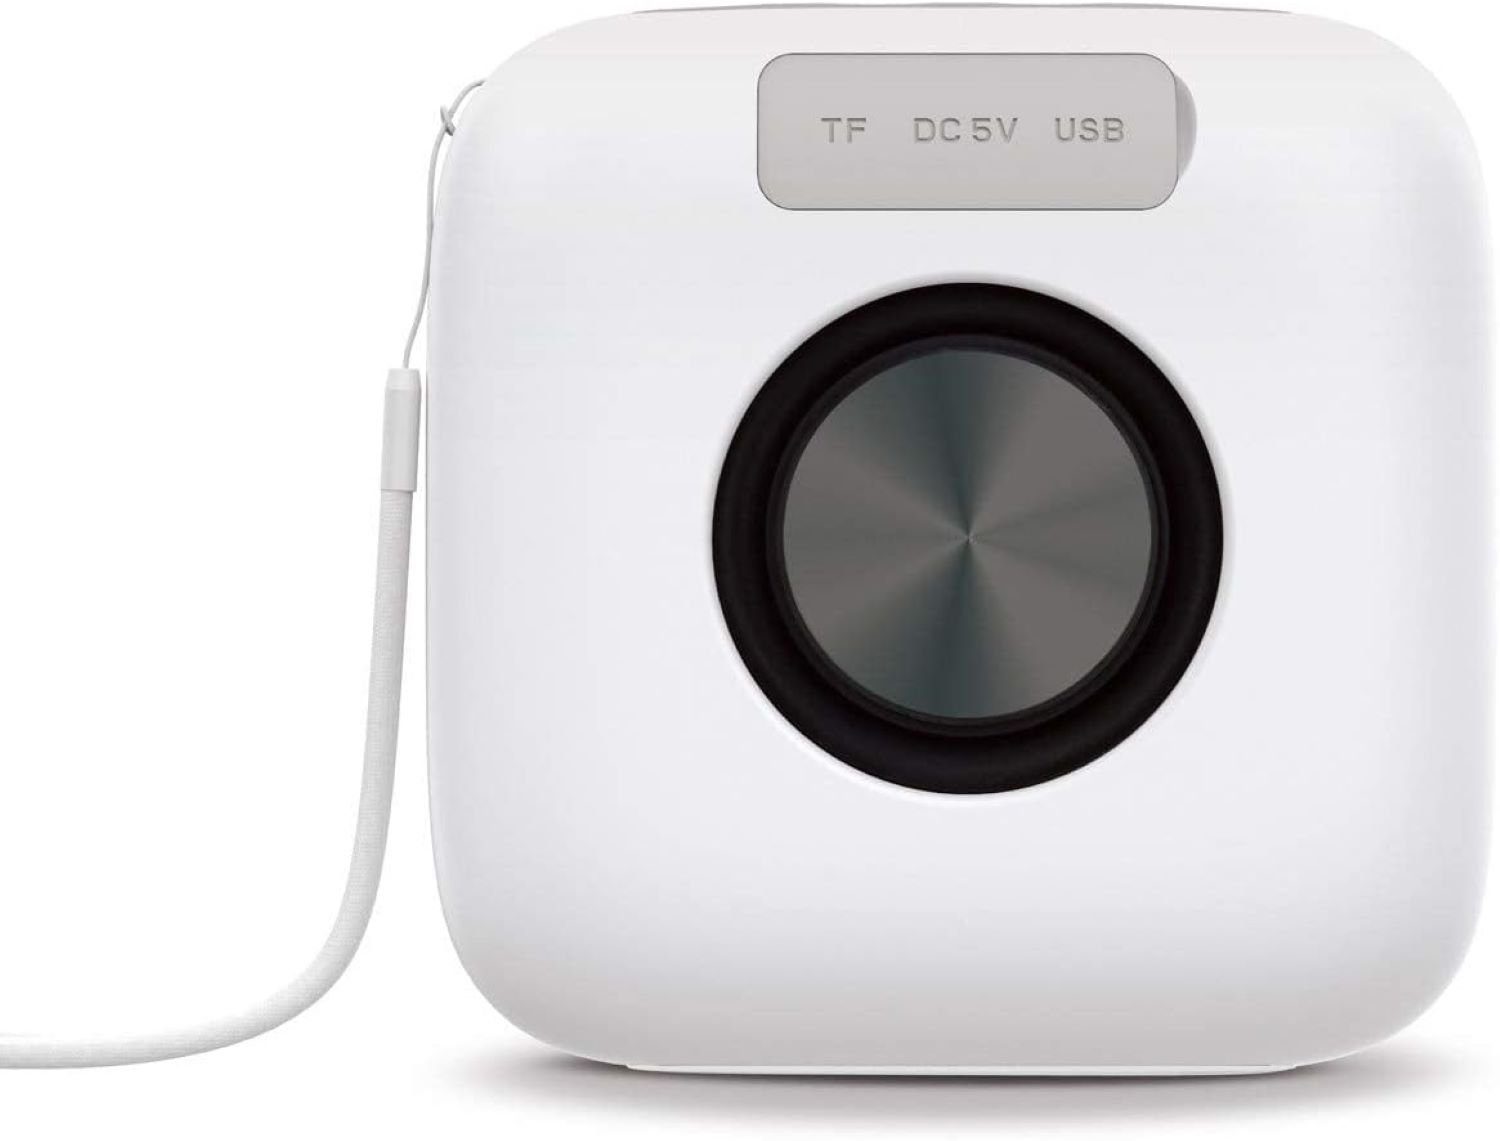 VEHO (Passive W, Bass (5 Integriertem PBE Bluetooth-Speaker MZ-4 Enhancer)